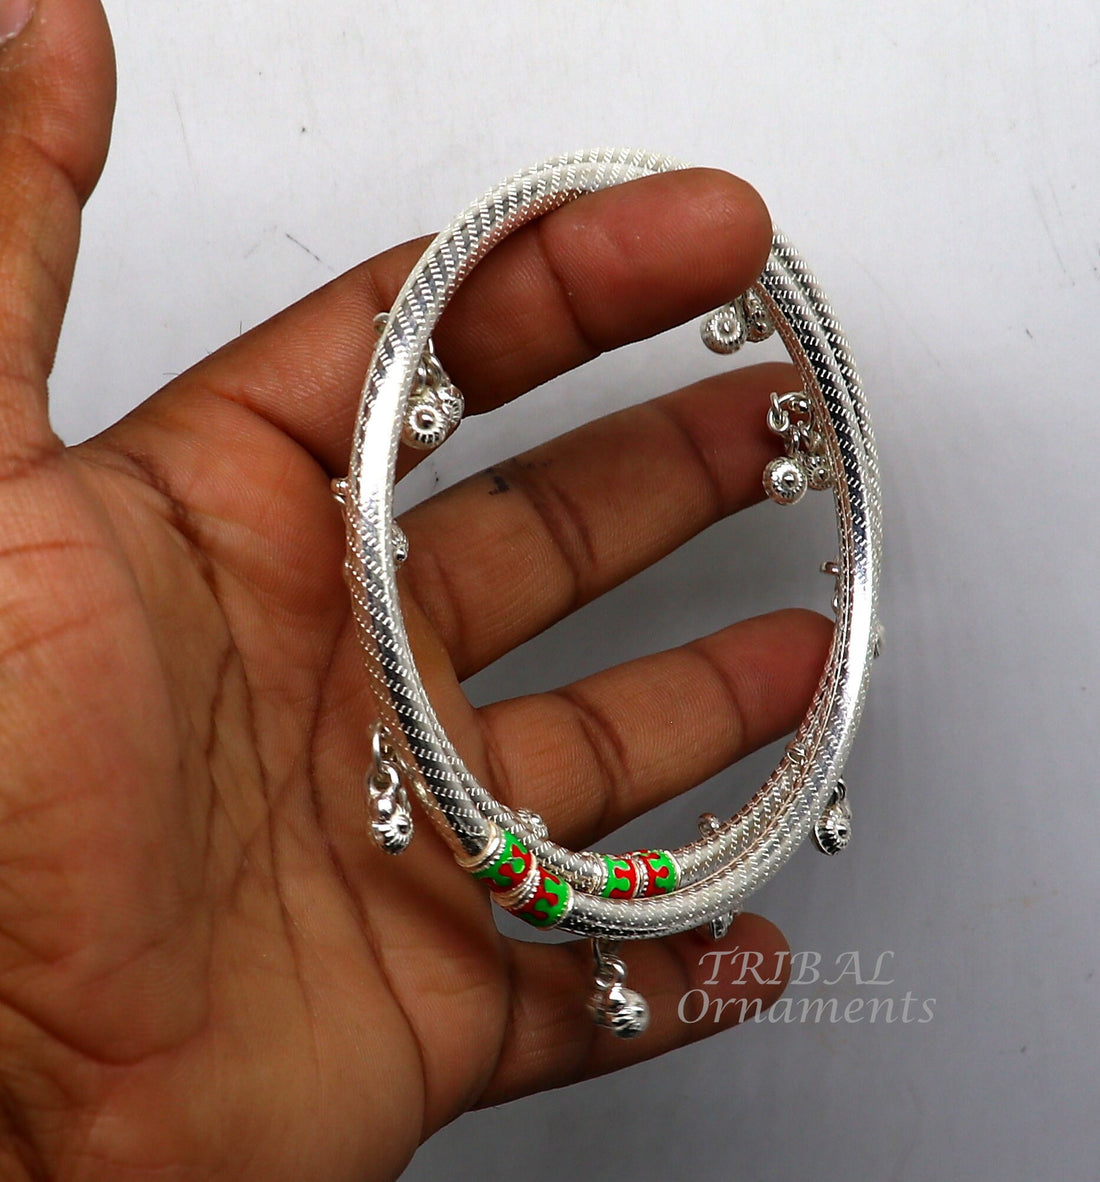 925 Sterling silver Handmade Indian traditional women's charming noisy jingling bells foot kada ankle kada bracelet tribal jewelry nsfk91 - TRIBAL ORNAMENTS